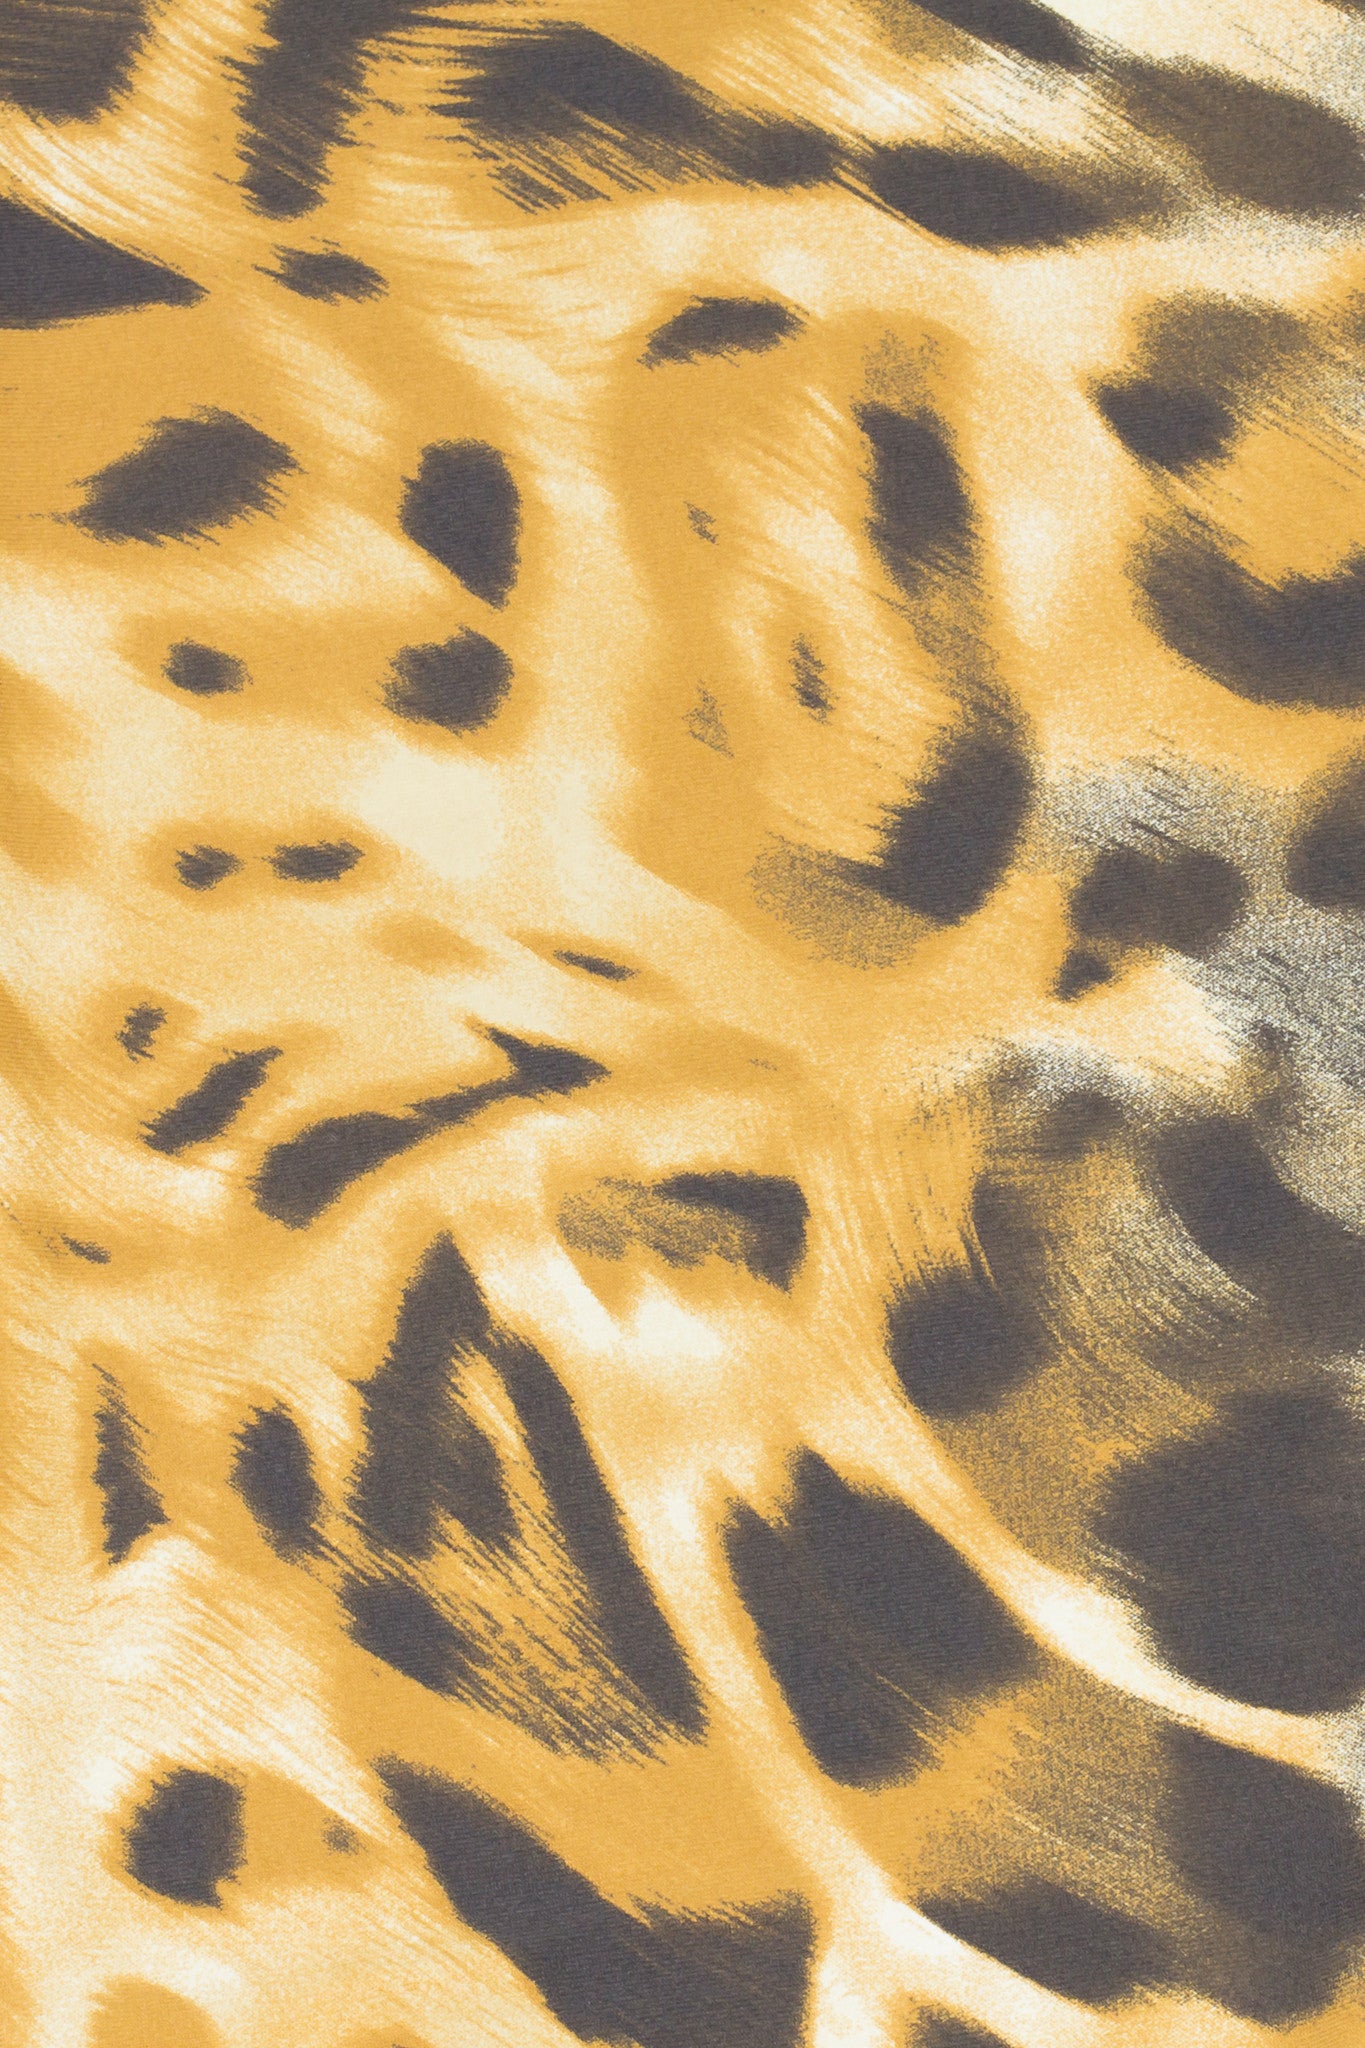 Legging Crazy Print - Amni, Brown Leopard